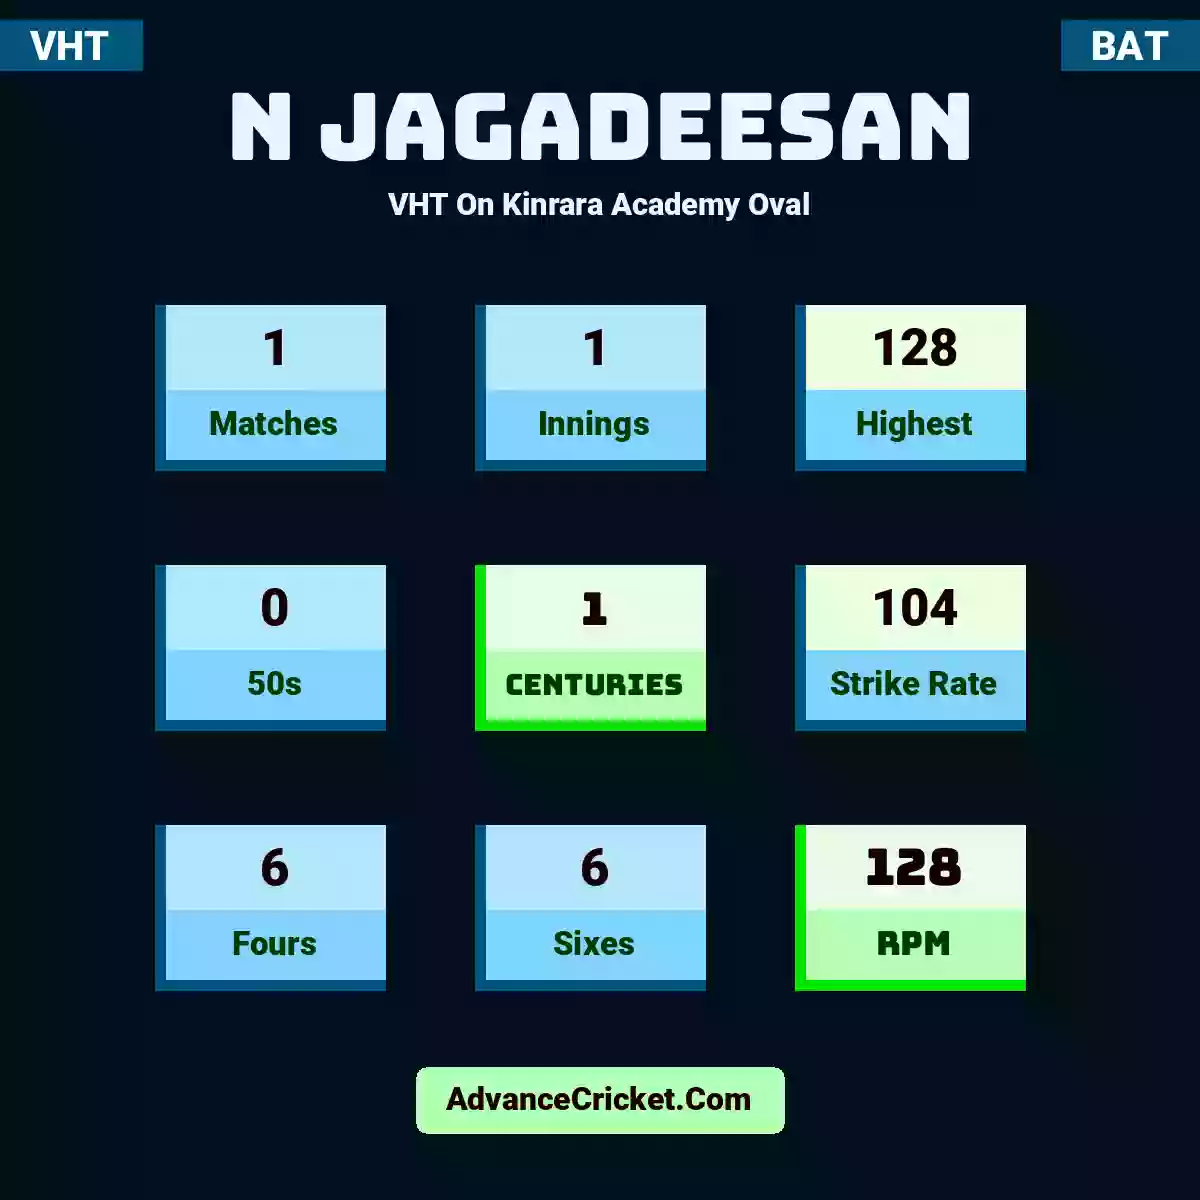 N Jagadeesan VHT  On Kinrara Academy Oval, N Jagadeesan played 1 matches, scored 128 runs as highest, 0 half-centuries, and 1 centuries, with a strike rate of 104. N.Jagadeesan hit 6 fours and 6 sixes, with an RPM of 128.